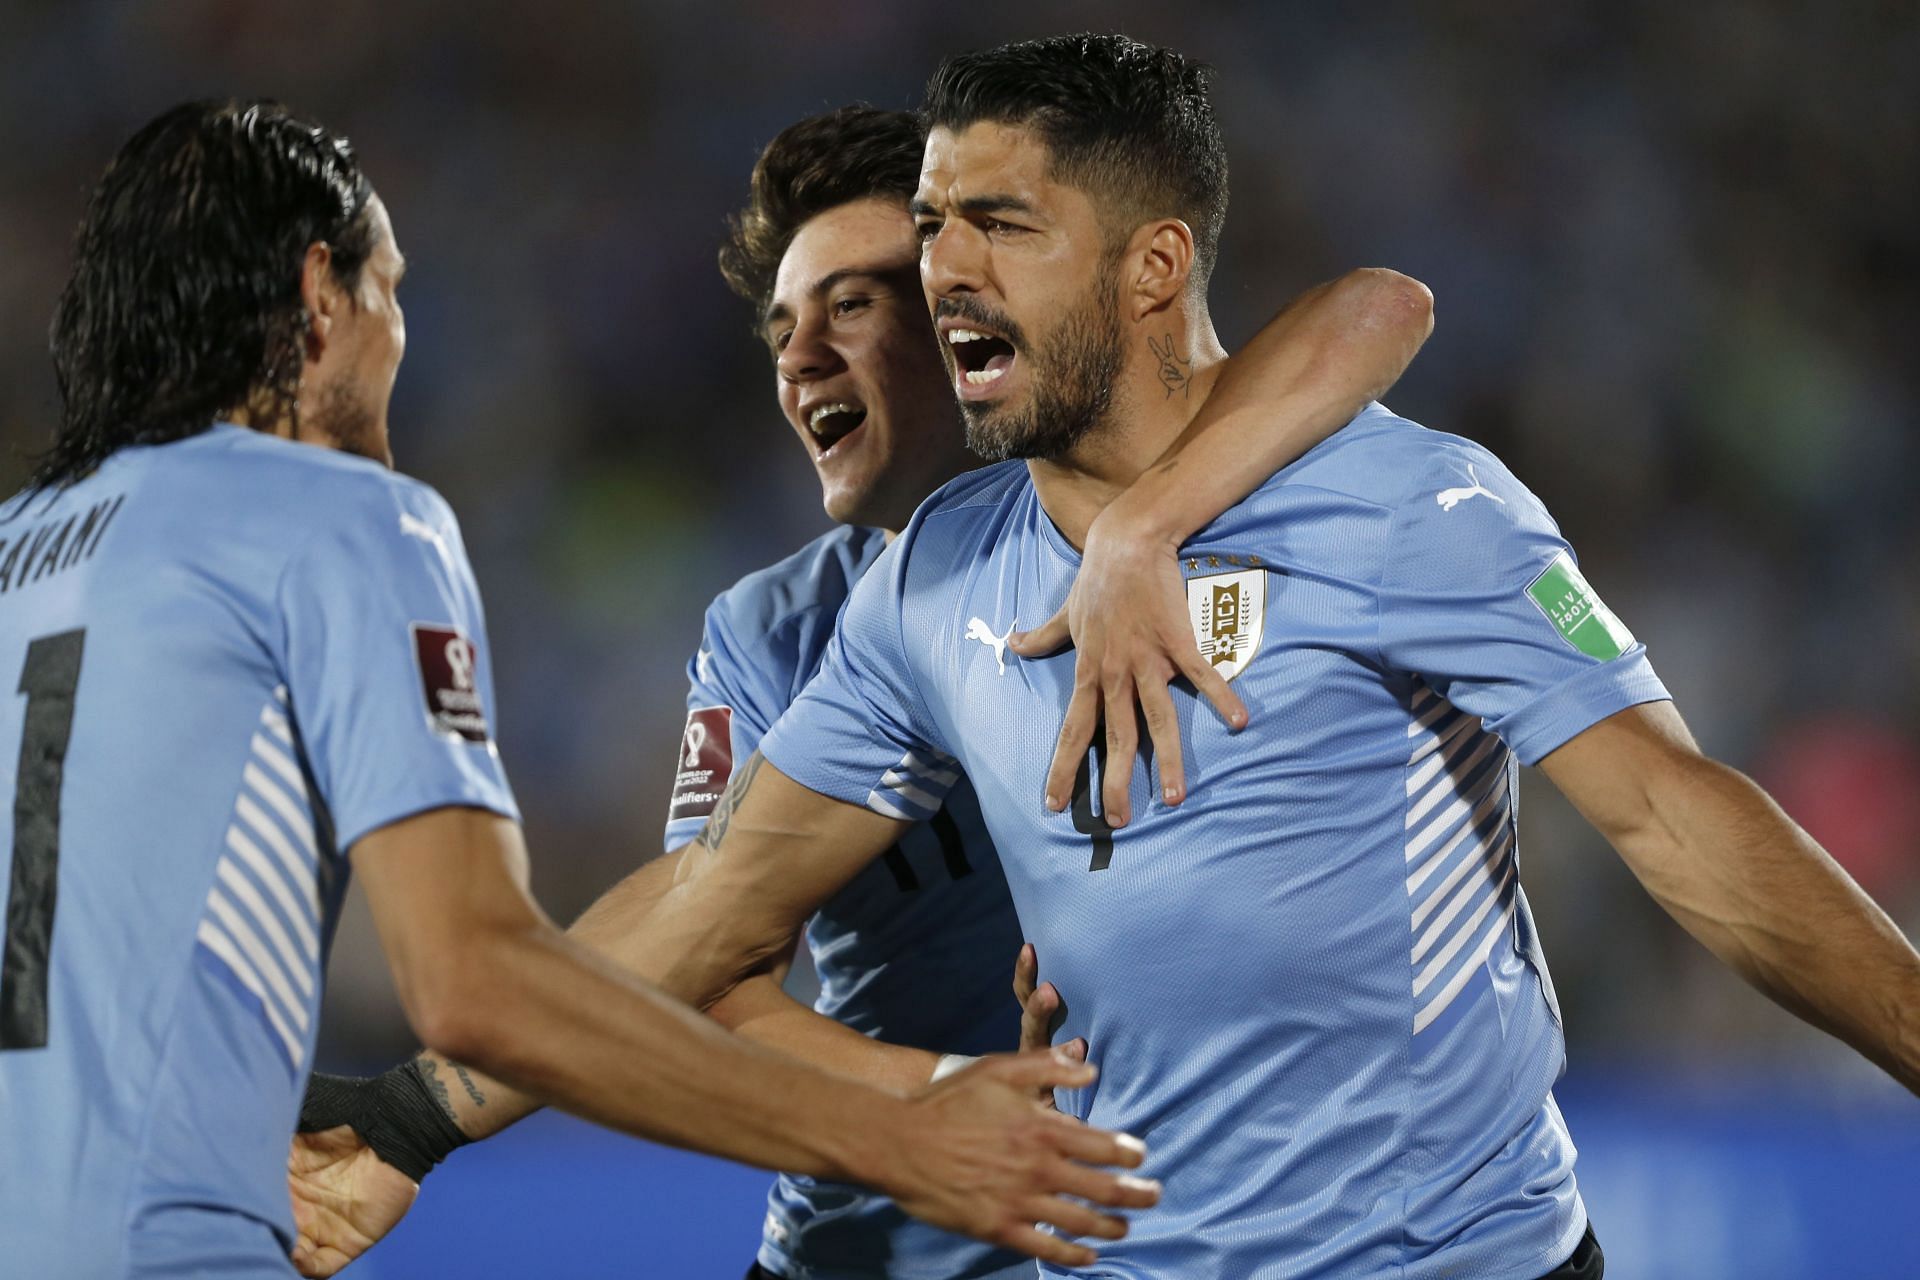 Uruguay v Venezuela - FIFA World Cup Qatar 2022 Qualifier